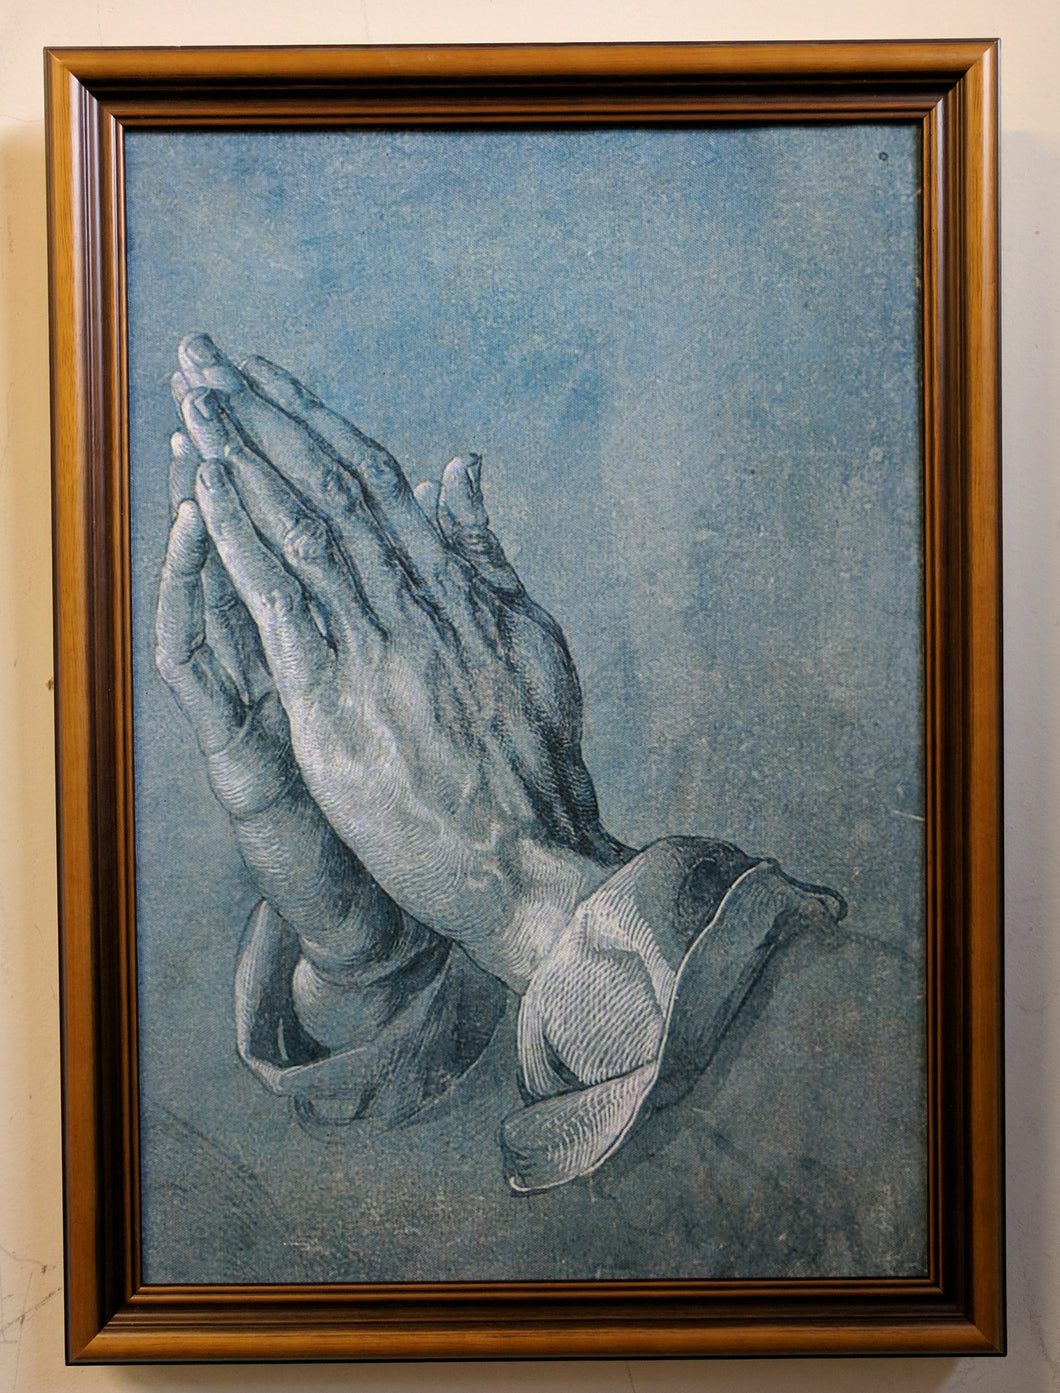 5124 Black and White Pastel of Man's Hands Praying